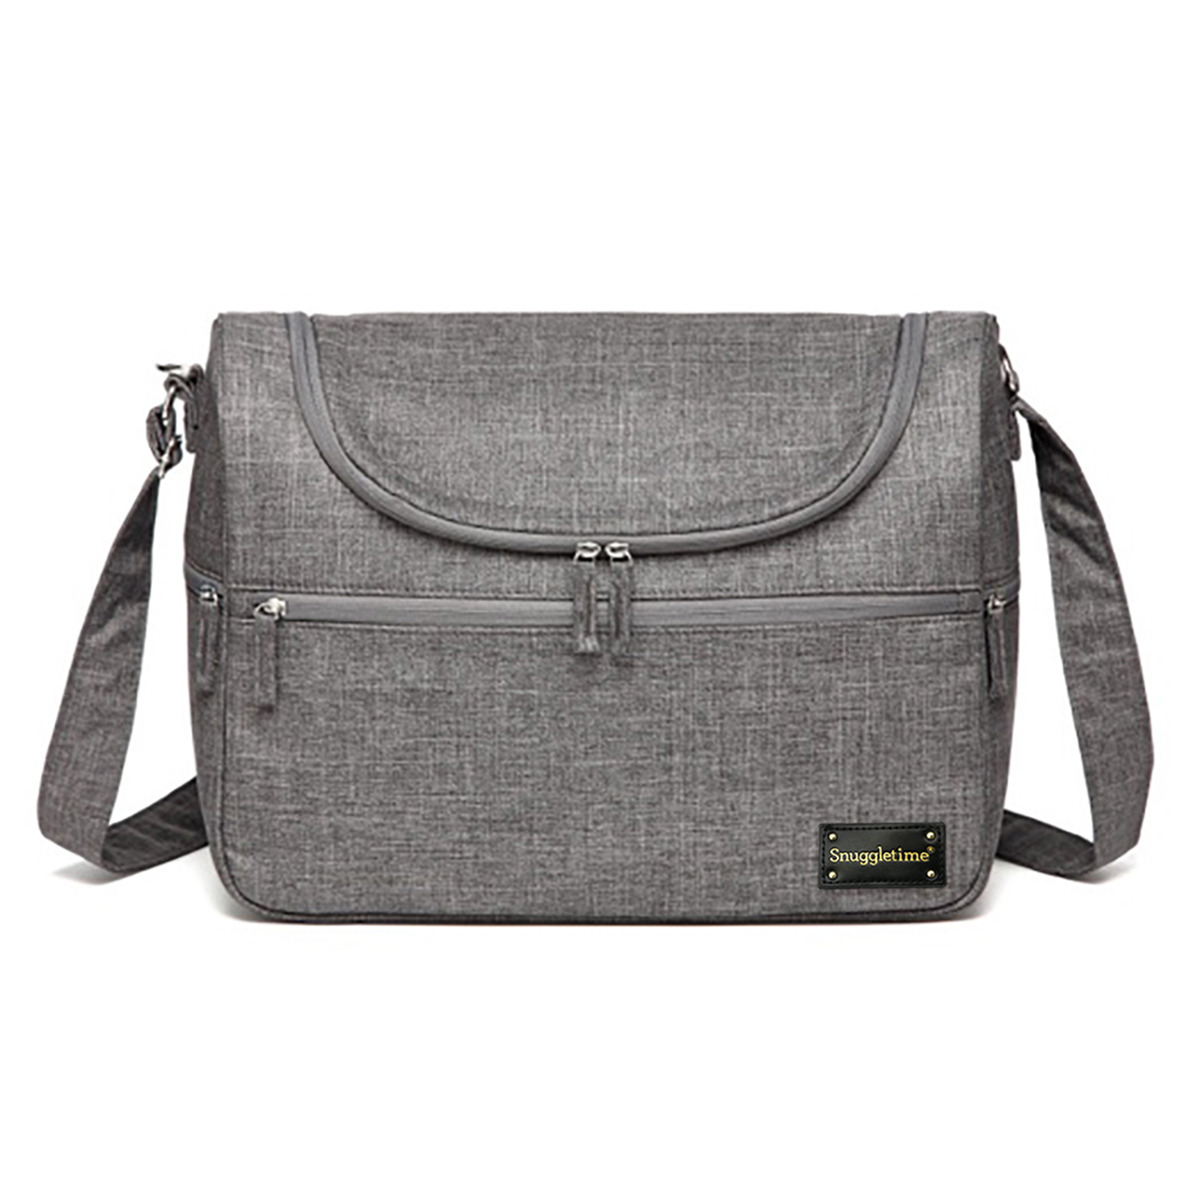 Snuggletime Nappy Bag - Classic Grey Travel Bag